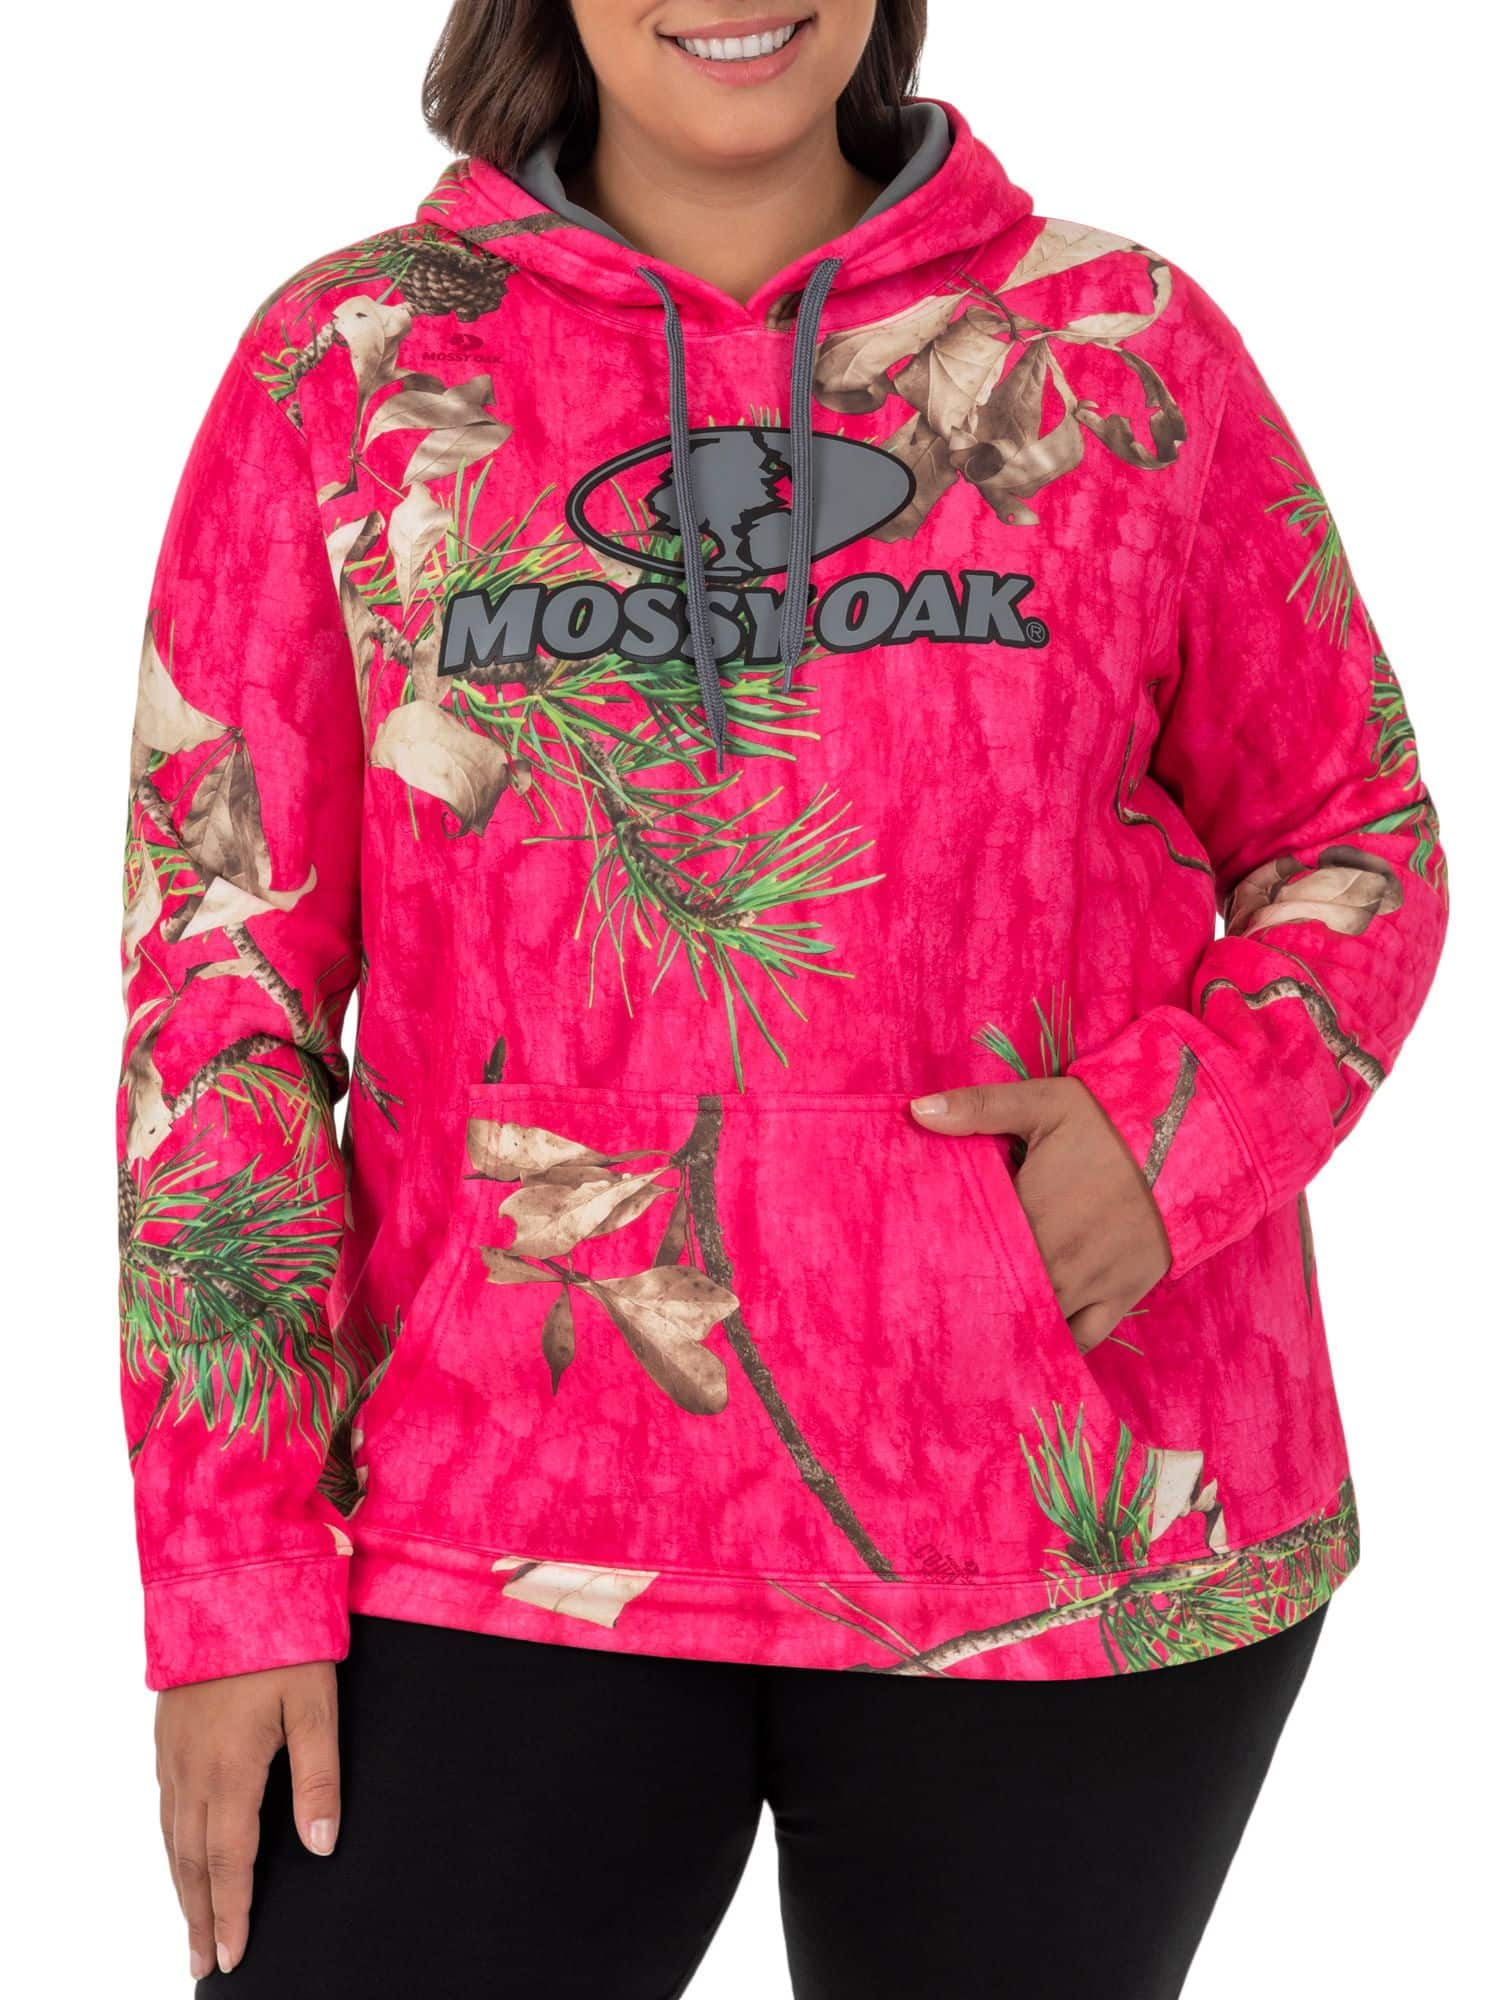 Mossy Oak Women’s Camo Performance Pullover Fleece Hoodie -$9.28(60% Off)